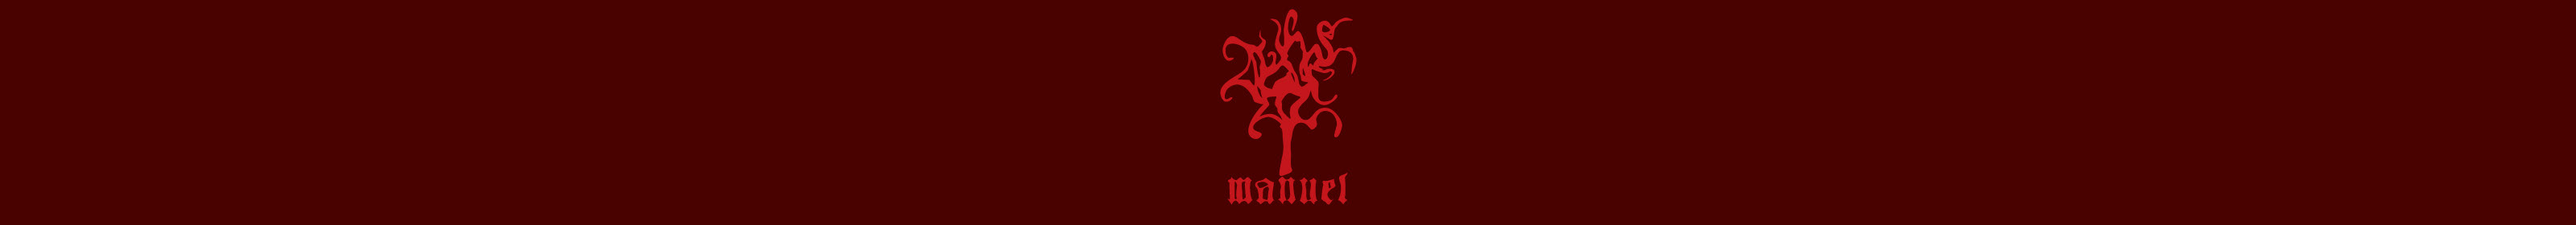 manuel bravi's profile banner